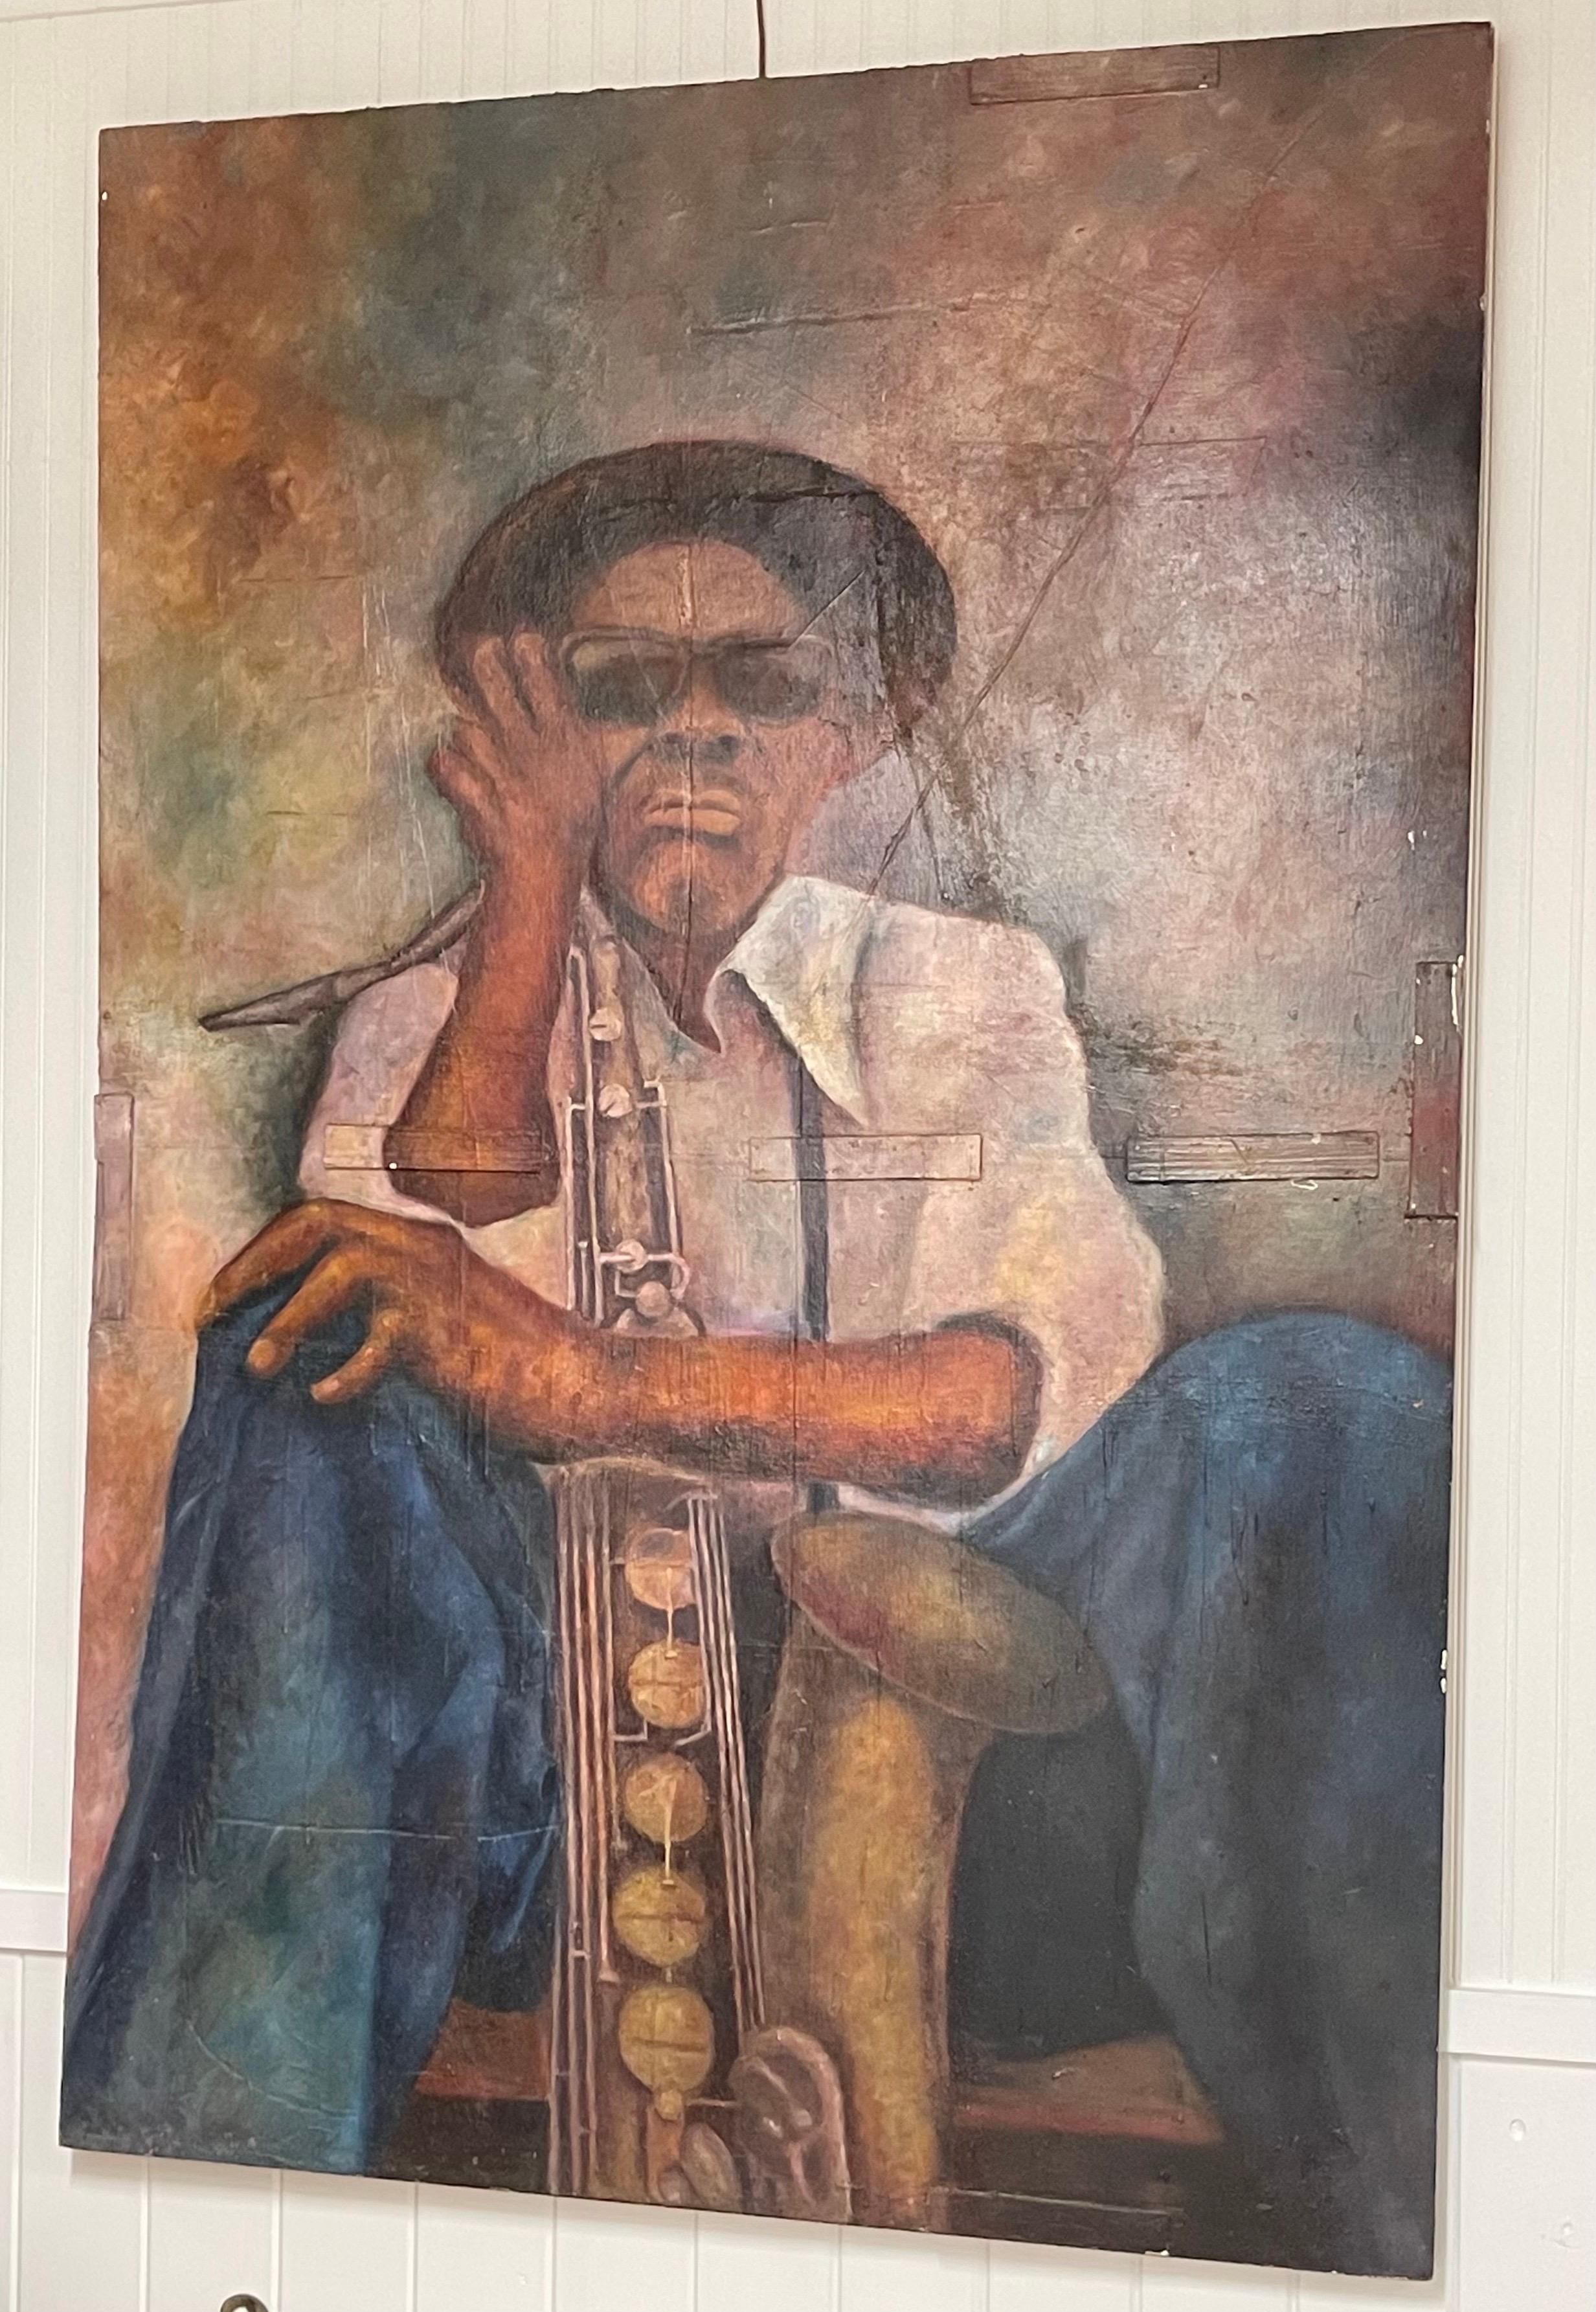 Wood Jazz Musician Original Large Oil Painting